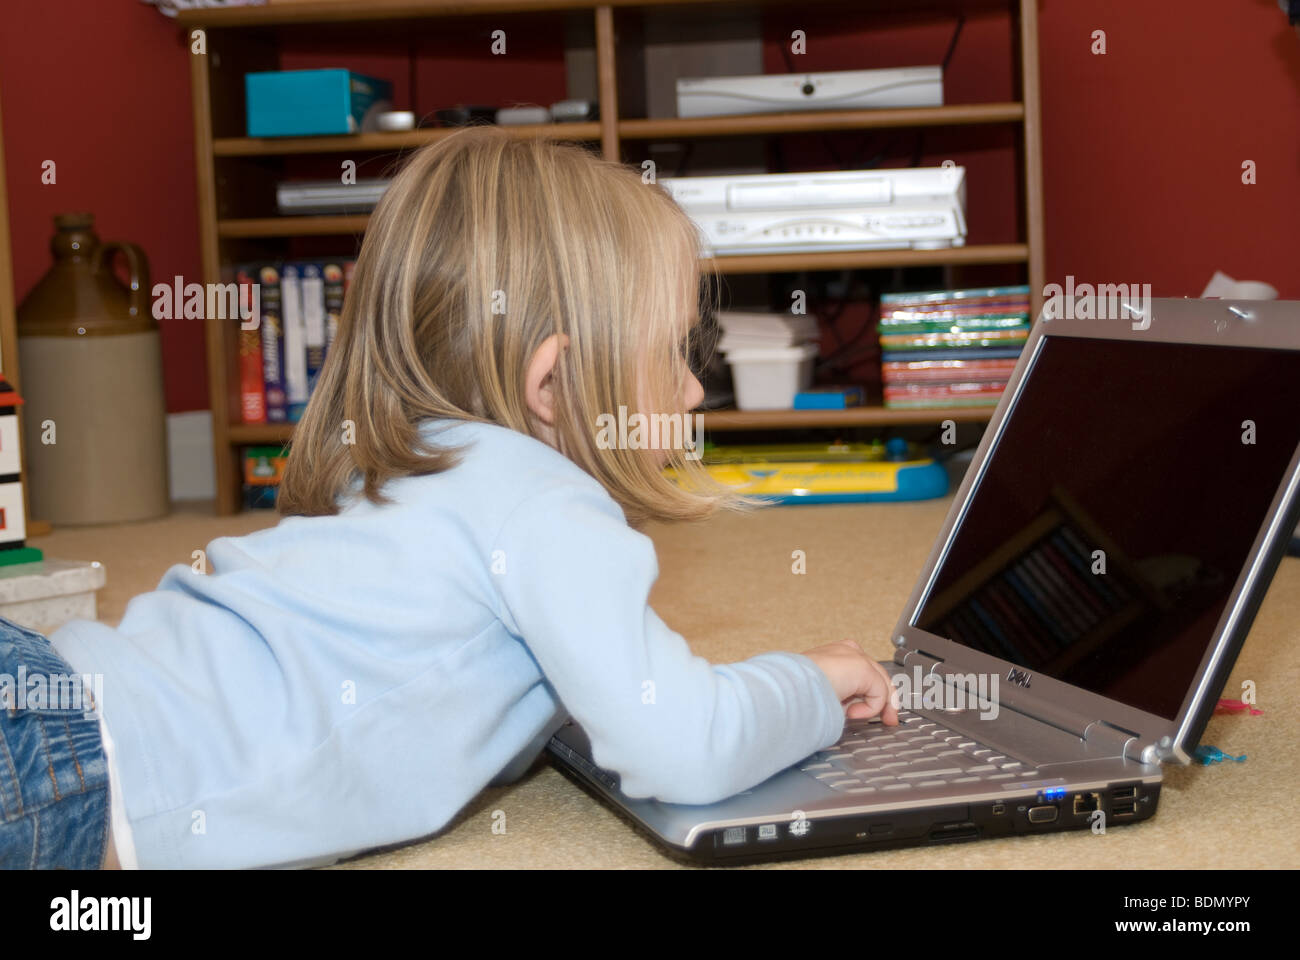 Toddler using laptop computer Stock Photo